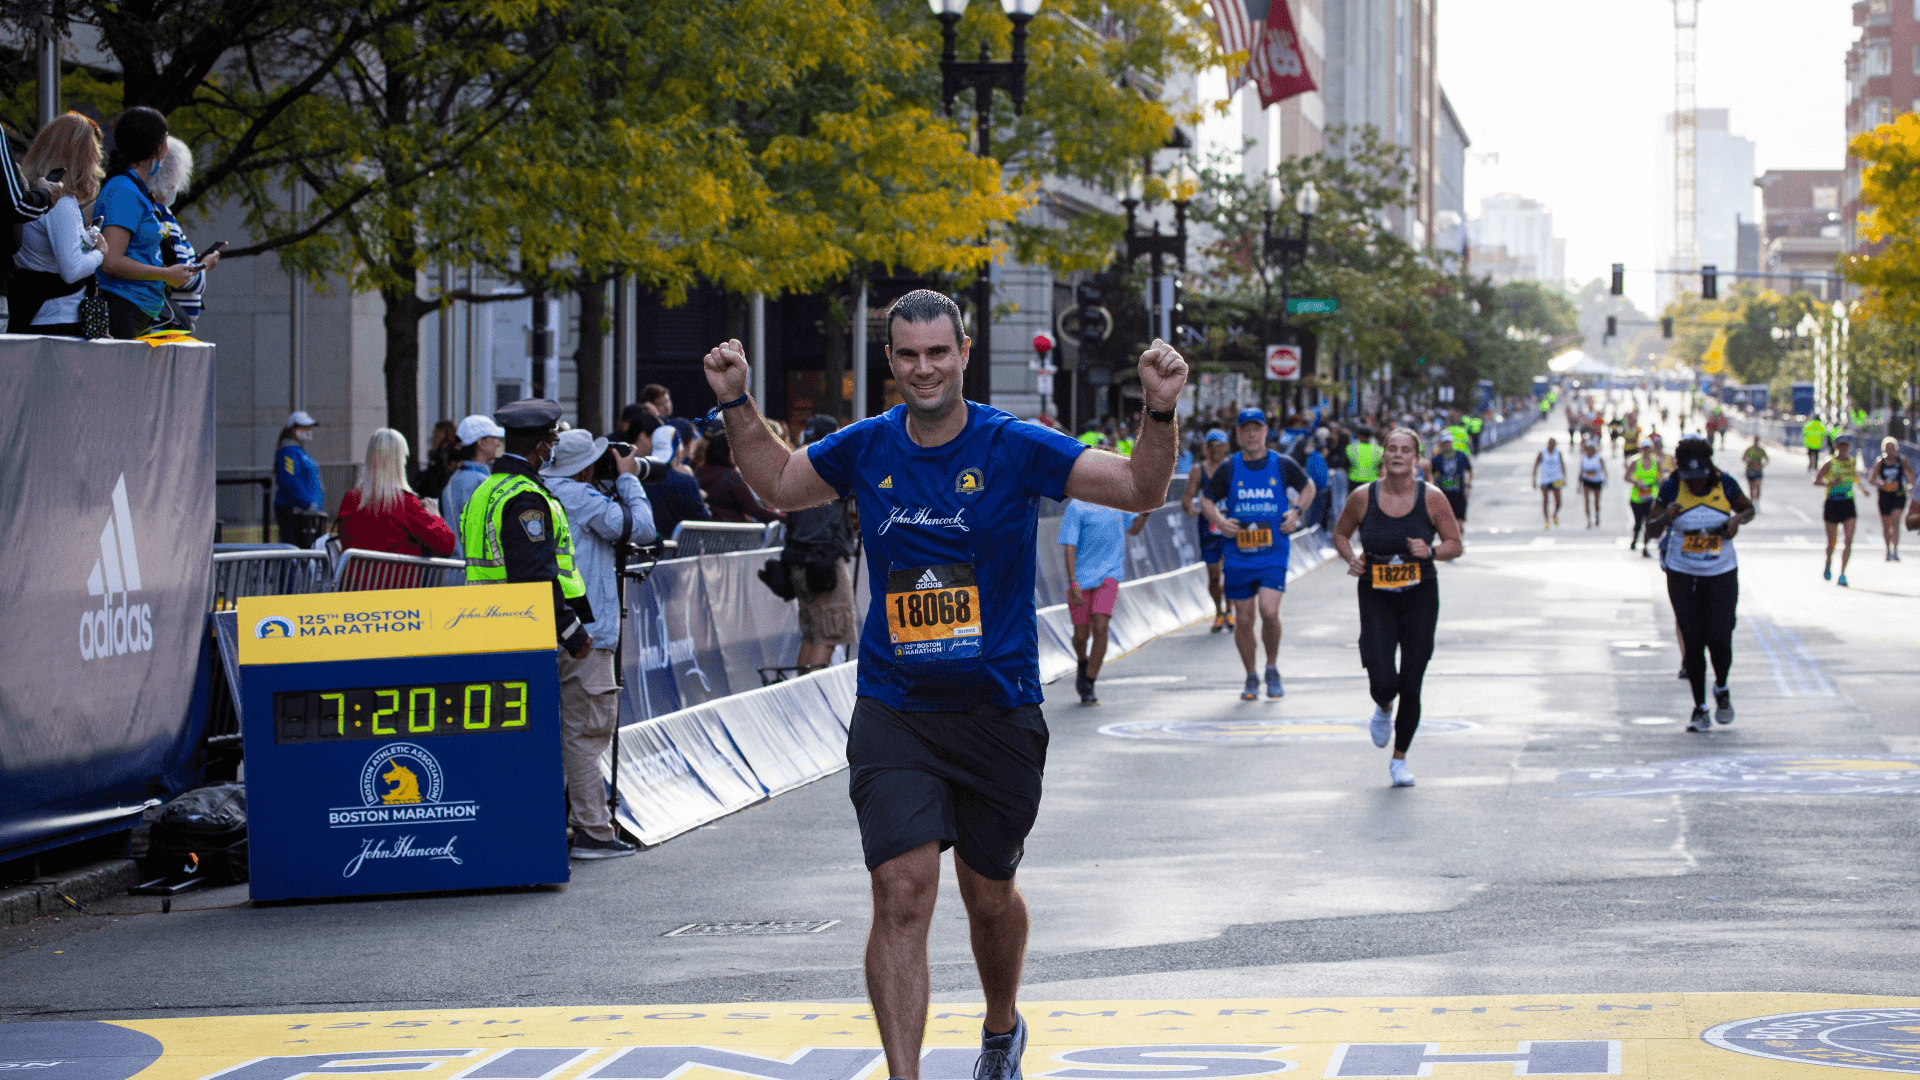 A John Hancock runner crossing the finish line at the 125th Boston Marathon